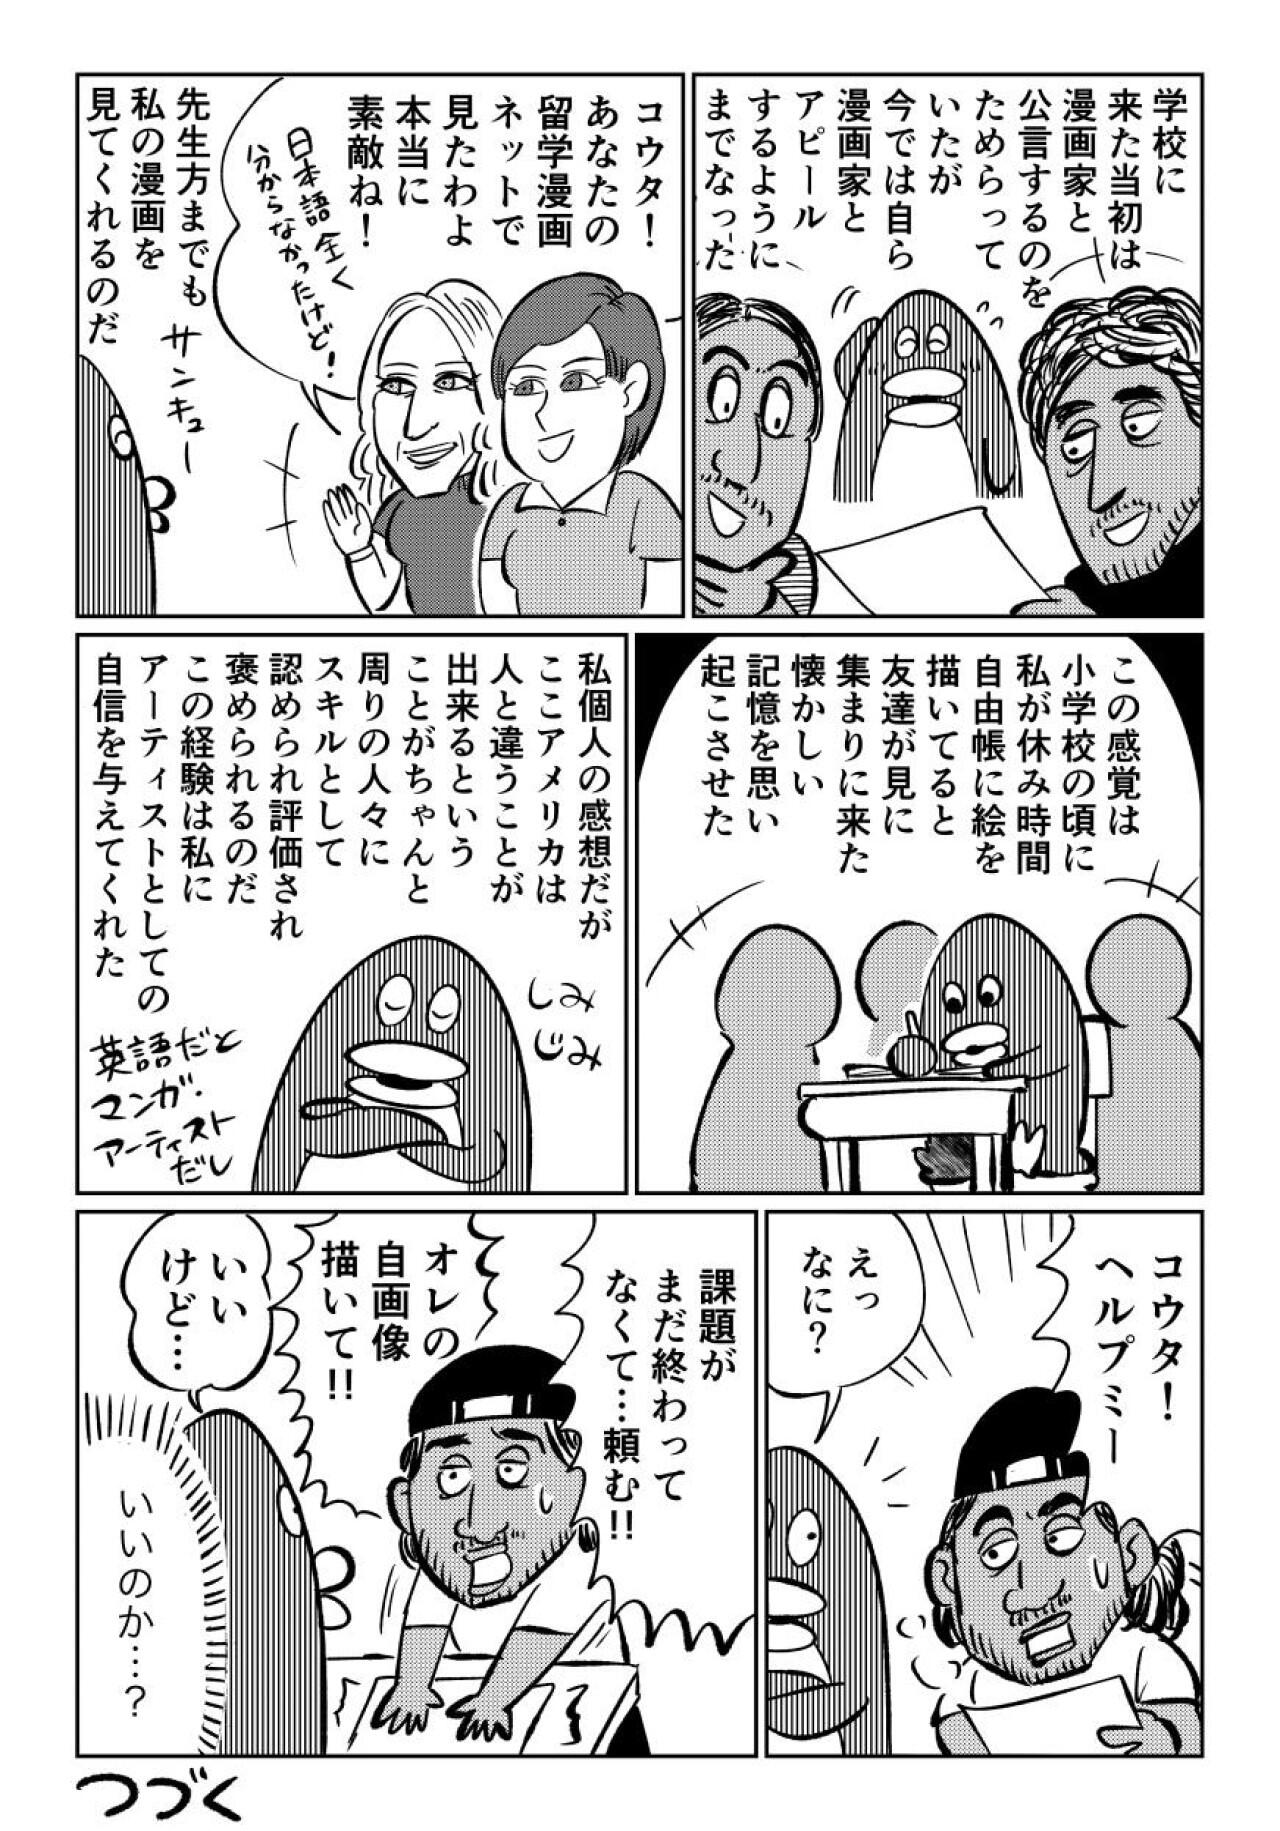 https://www.ryugaku.co.jp/column/images/34sai9_4_1280.jpg